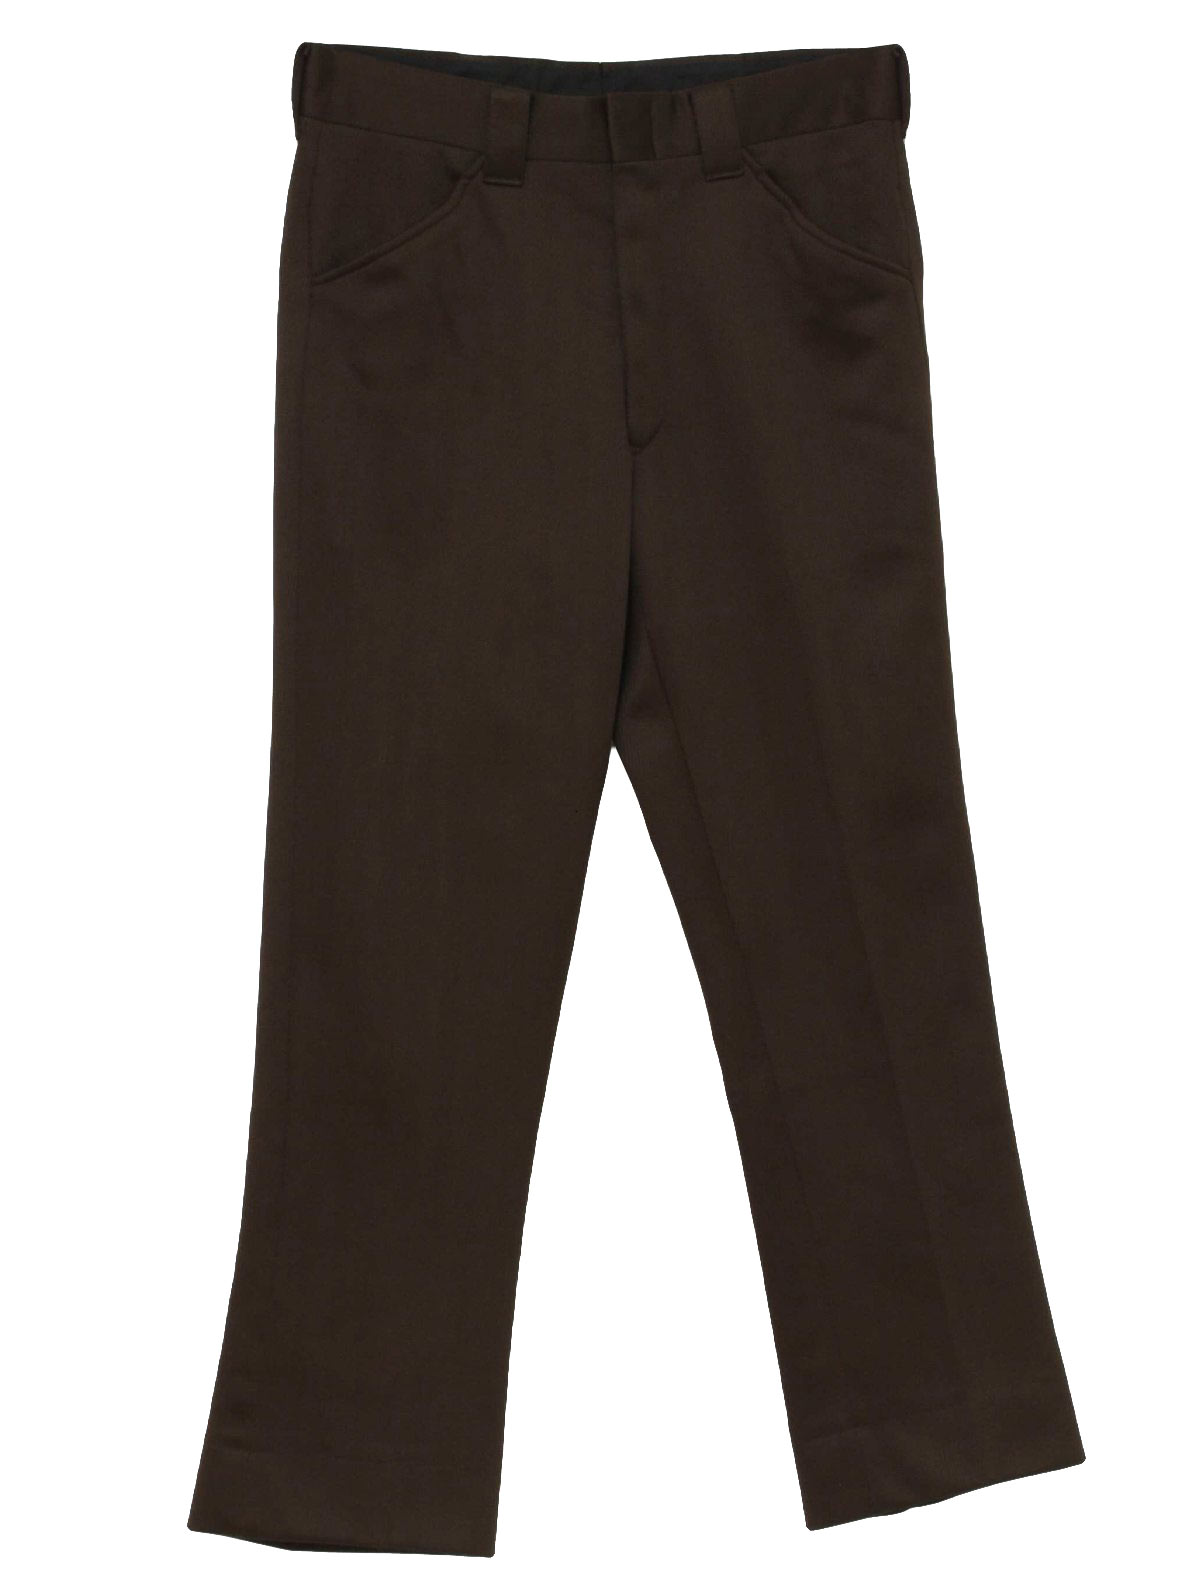 Retro 70's Pants: 70s -No Label- Mens dark brown knit slightly flared ...